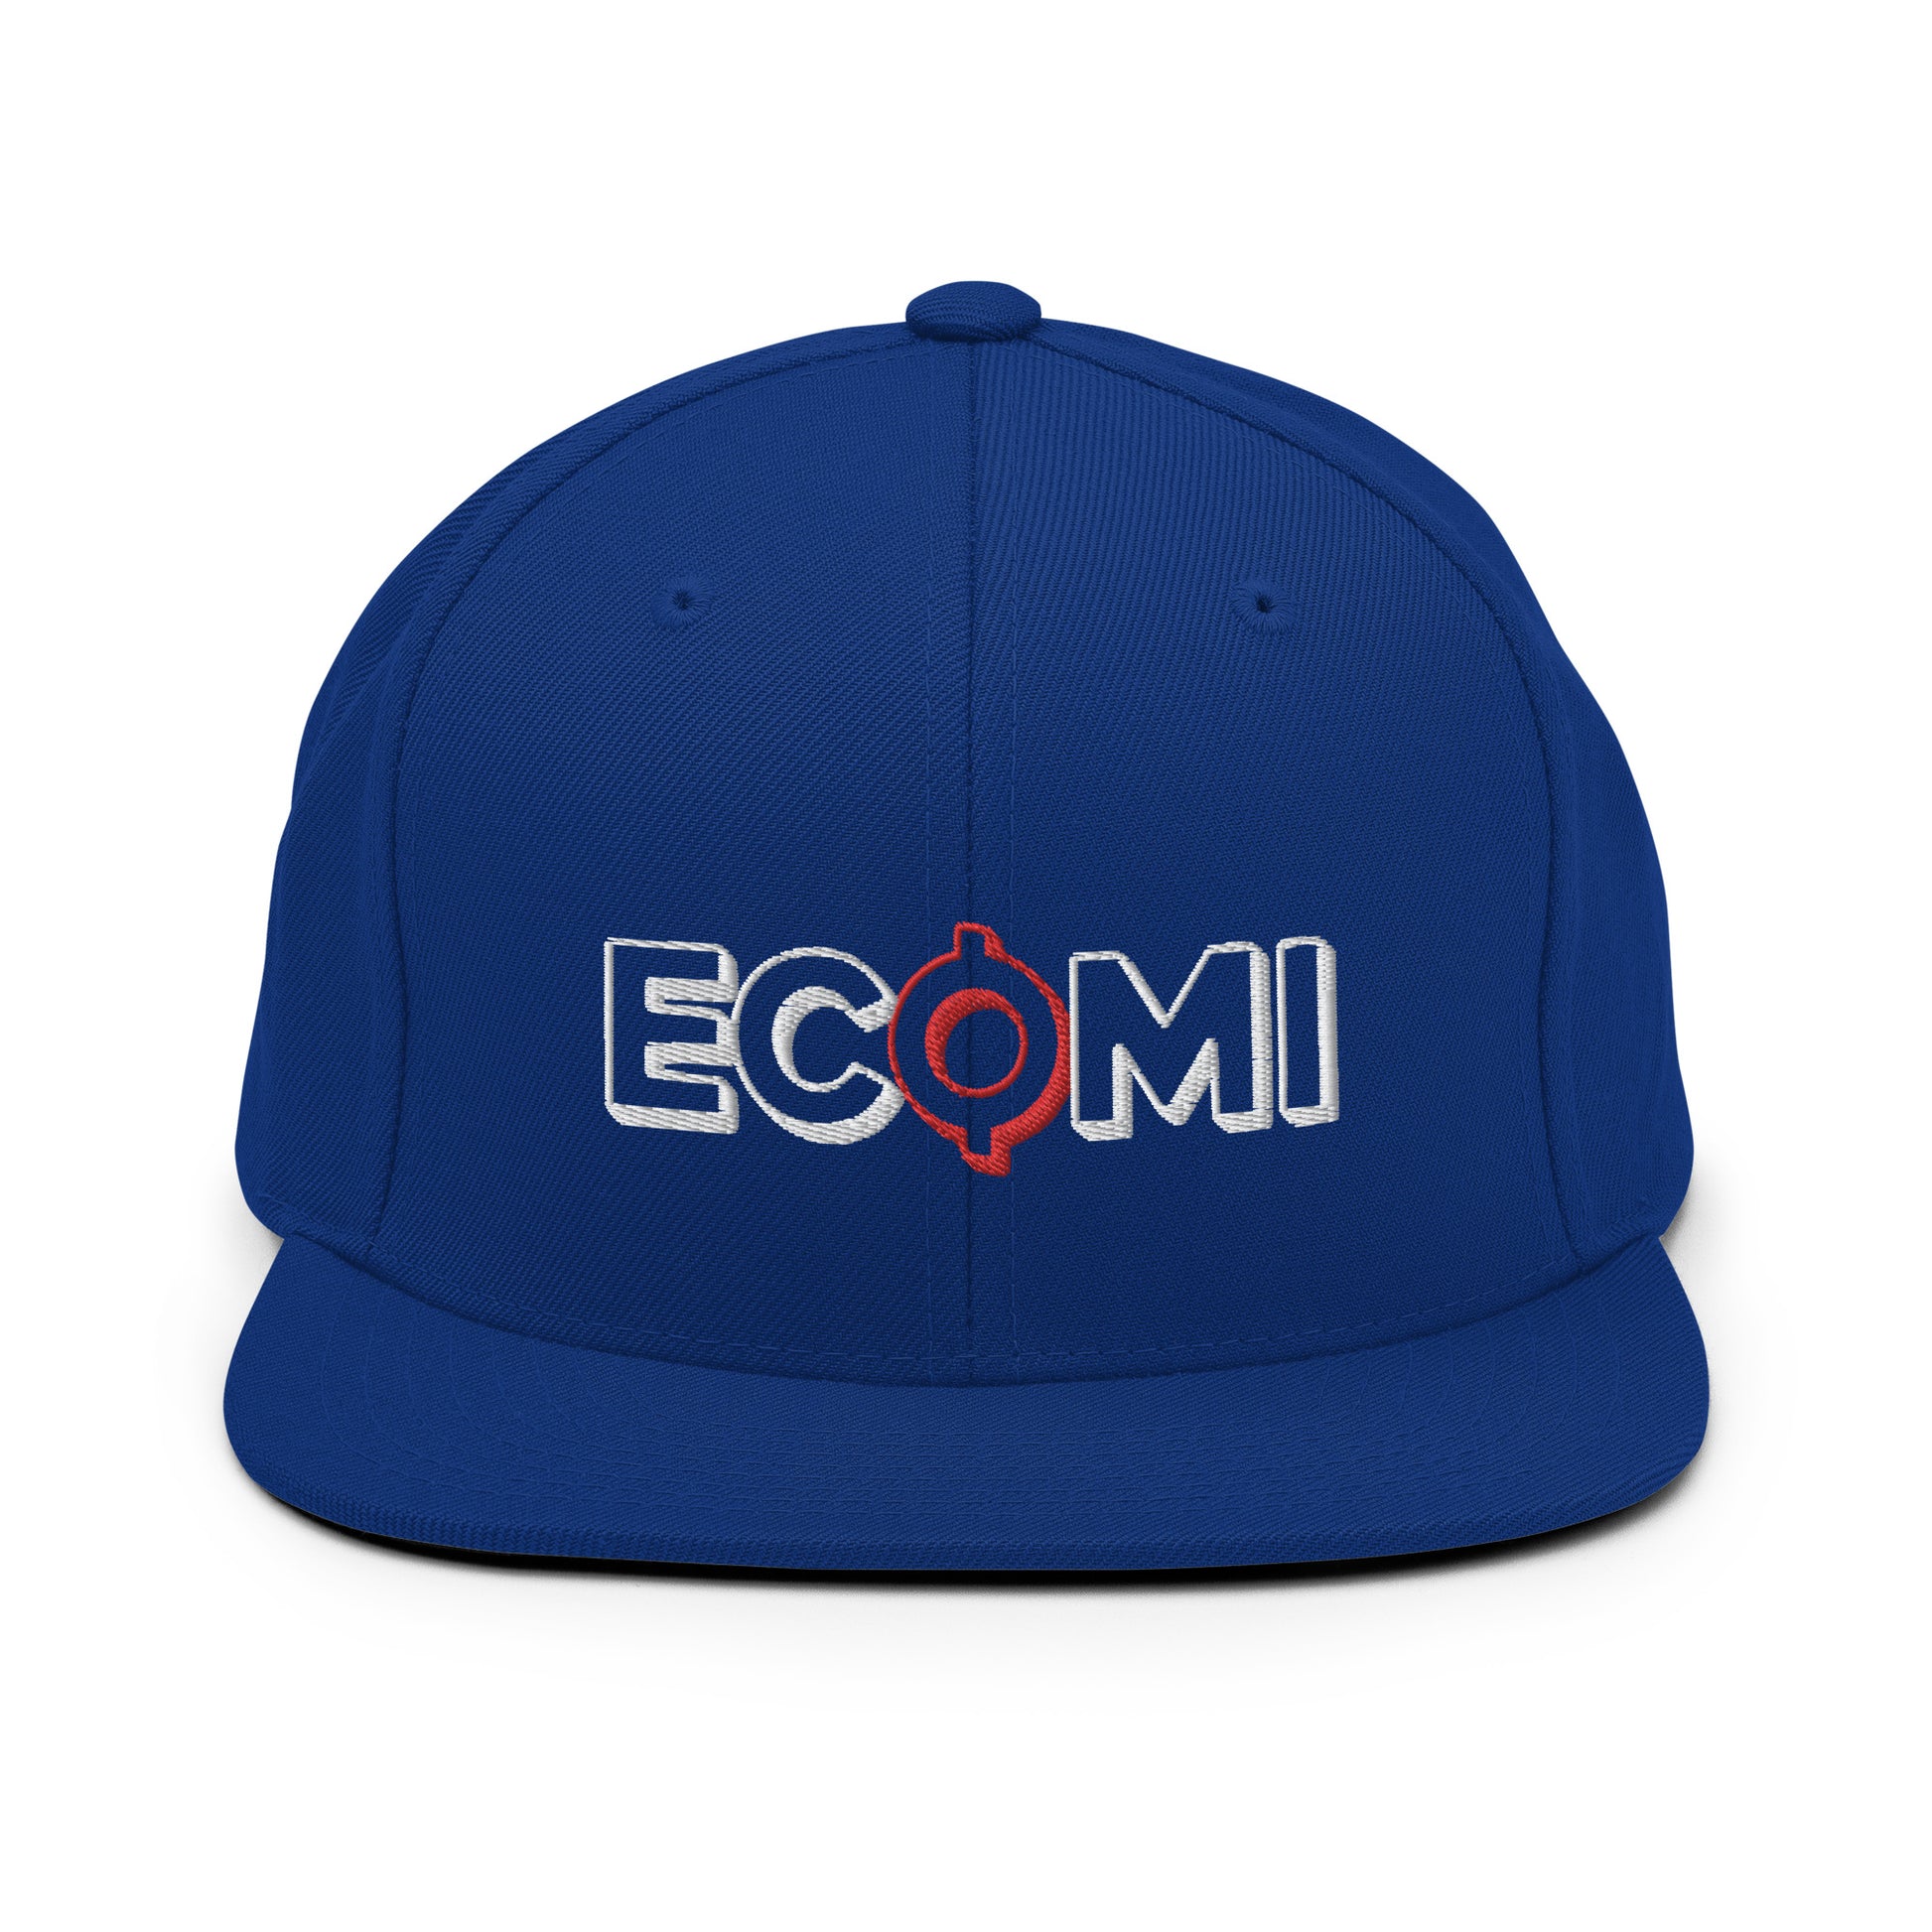 Ecomi Snapback Hat.